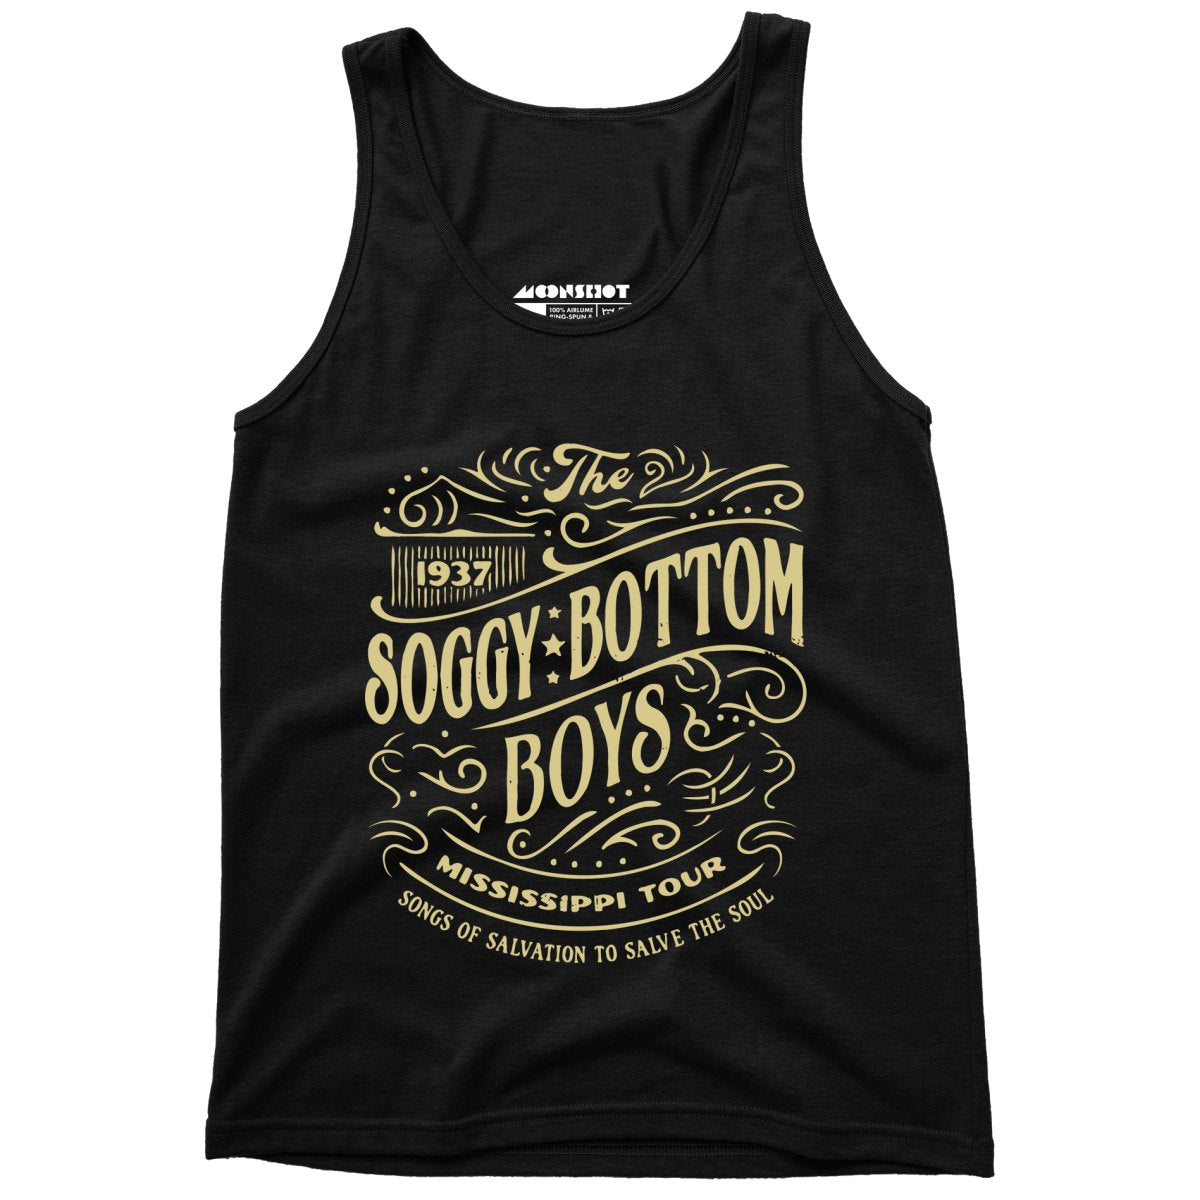 Soggy Bottom Boys - 1937 Mississippi Tour - Unisex Tank Top